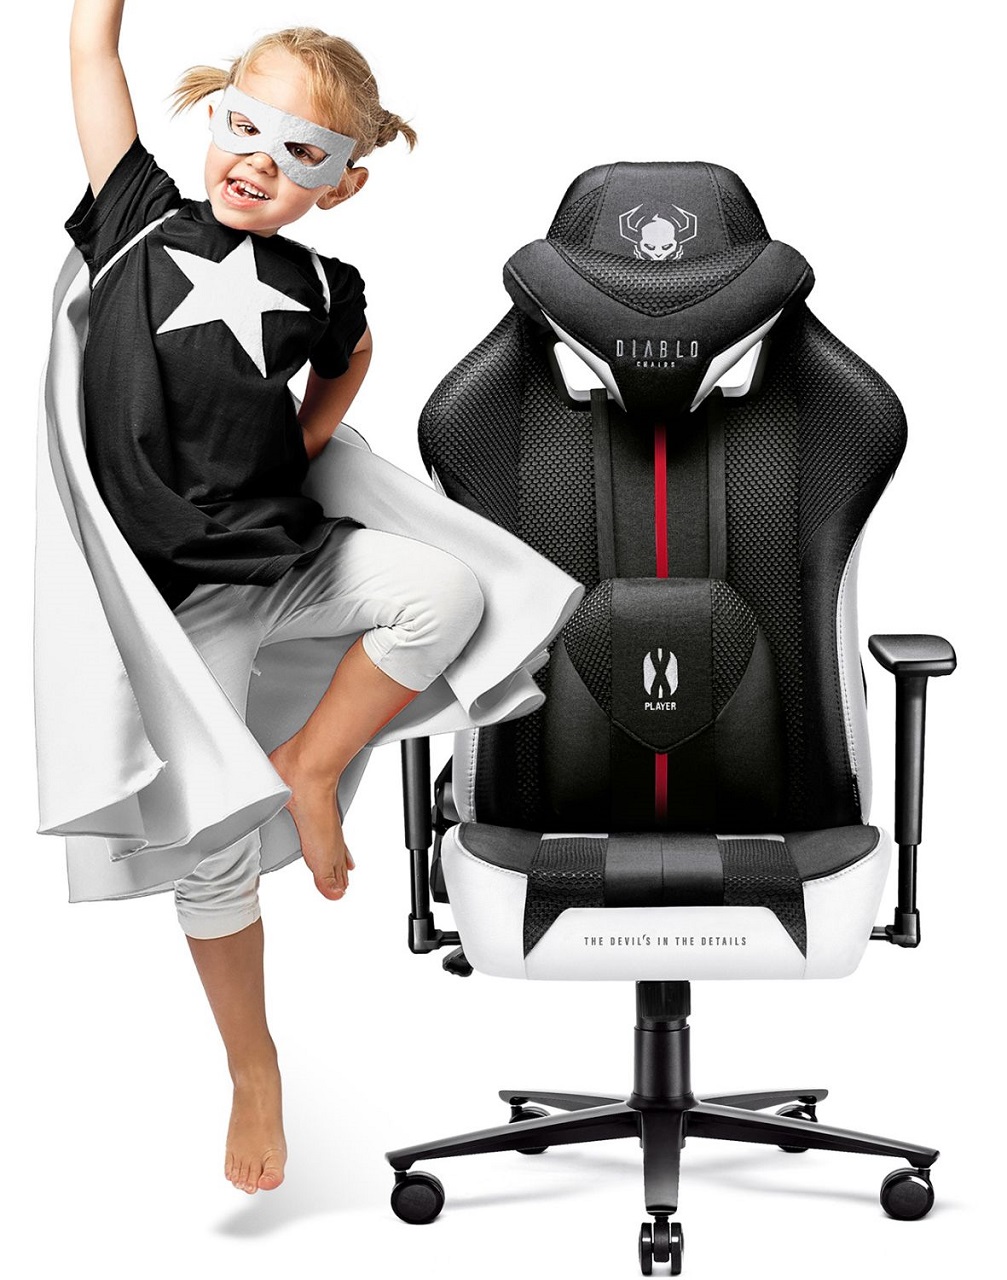 diablo x player kids gaming chair for children